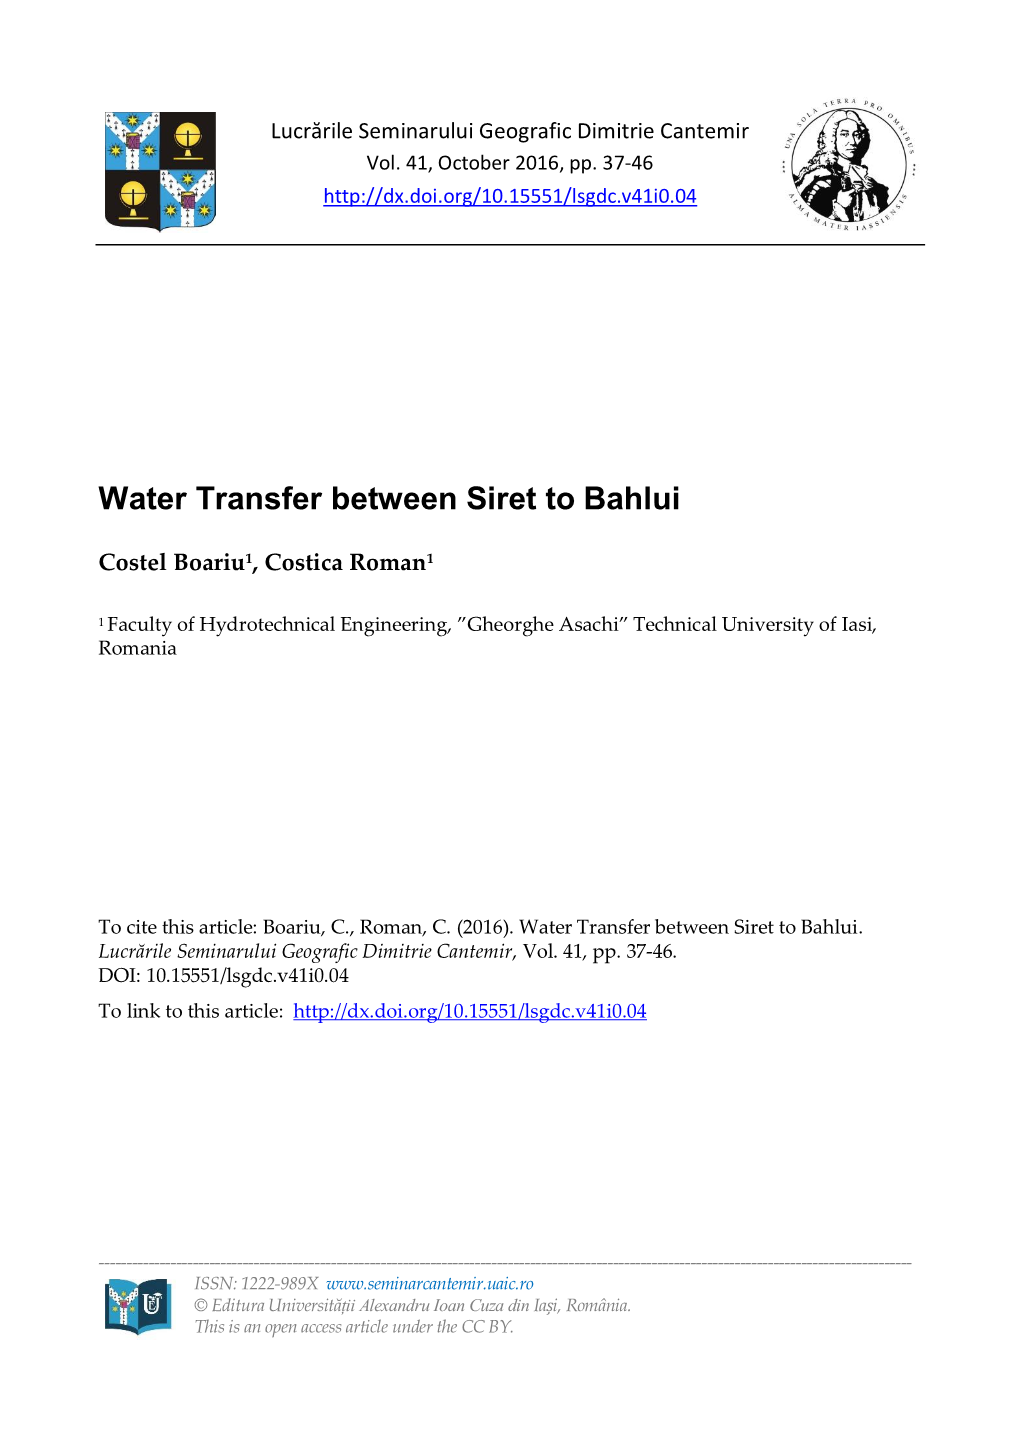 Water Transfer Between Siret to Bahlui